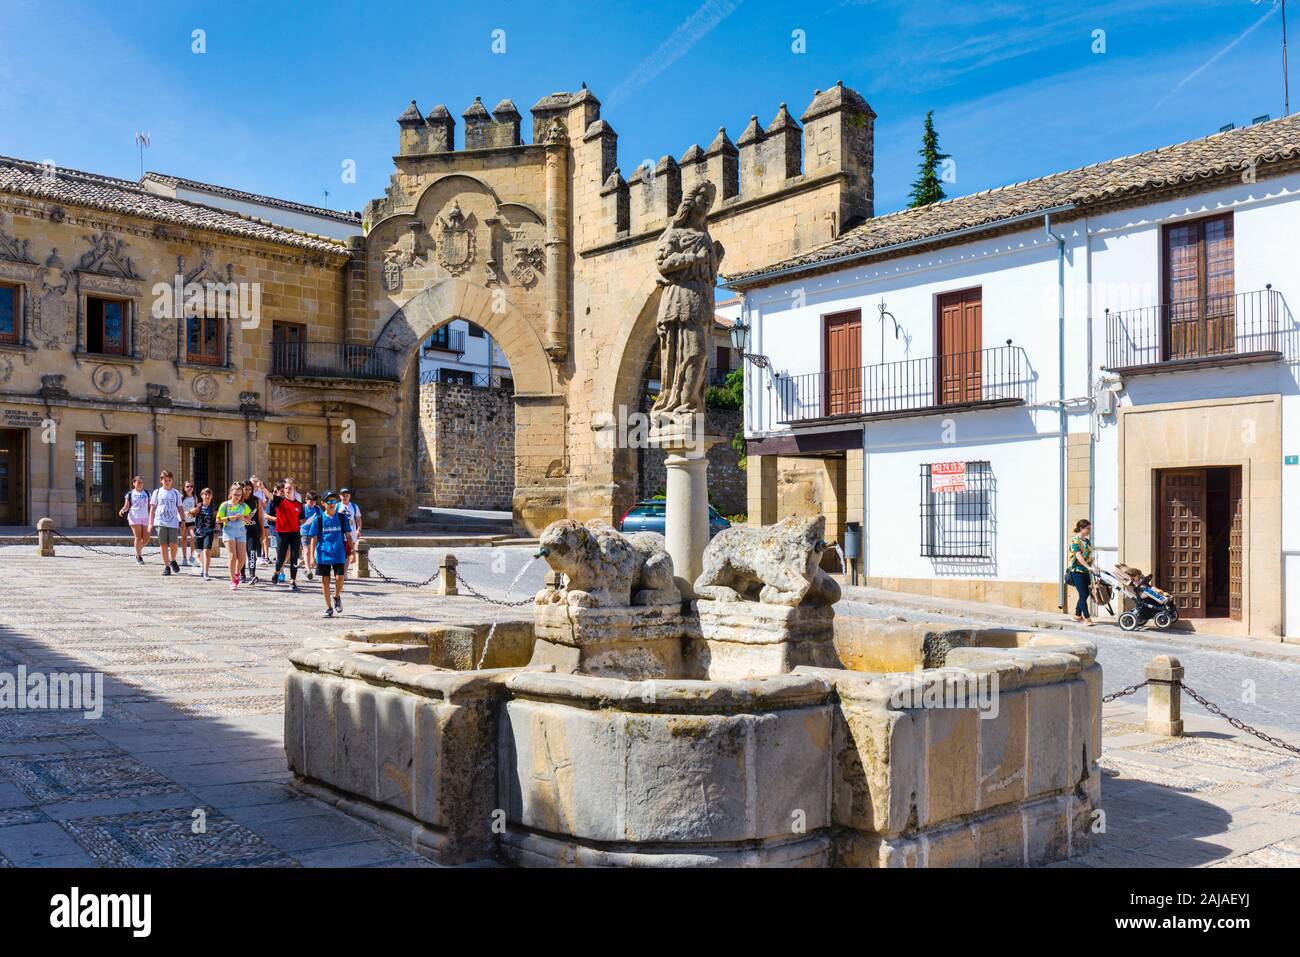 Fuente de los Leones, or Fountain of the Lions, in the Plaza del Populo, Baeza, Jaen Province, Andalusia, Spain.  The ornamental city gate in the back Stock Photo